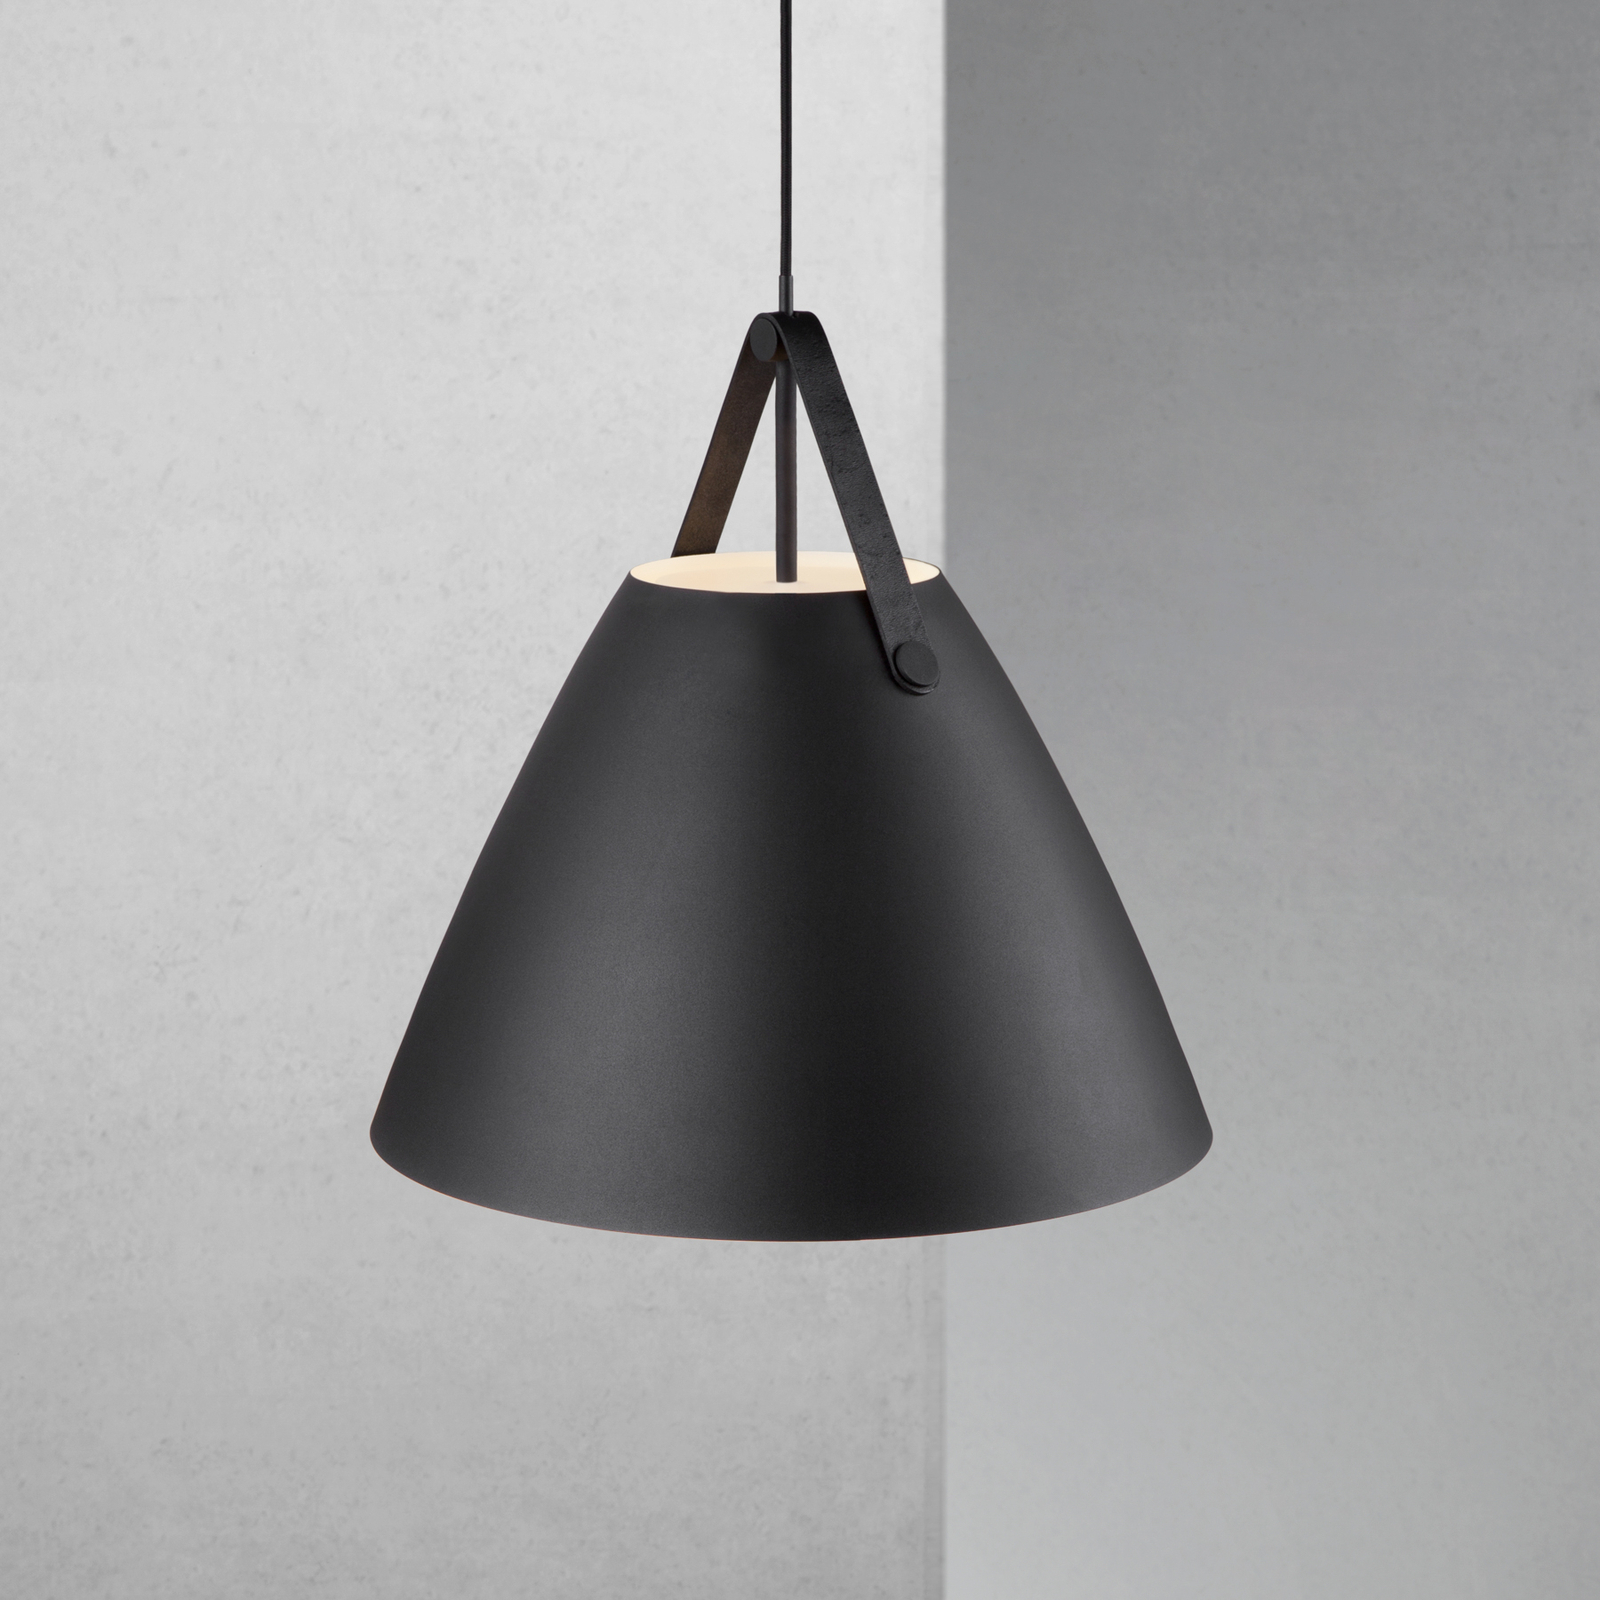 Pendant light Strap, metal shade, Ø 48cm, black